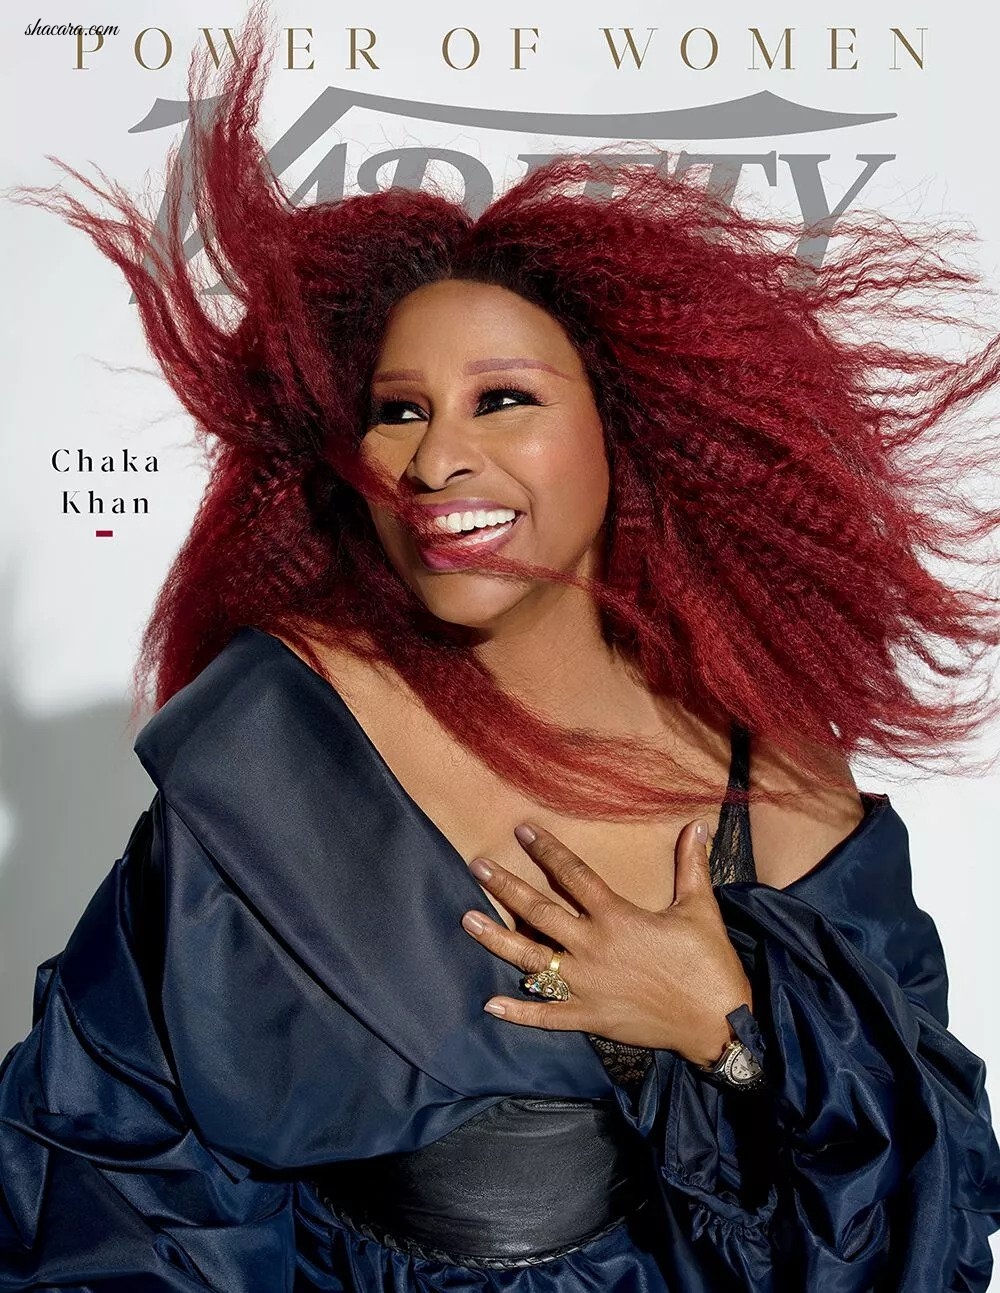 Music Icons, Mariah Carey & Chaka Khan Cover Variety’s “Power Of Women” Issue